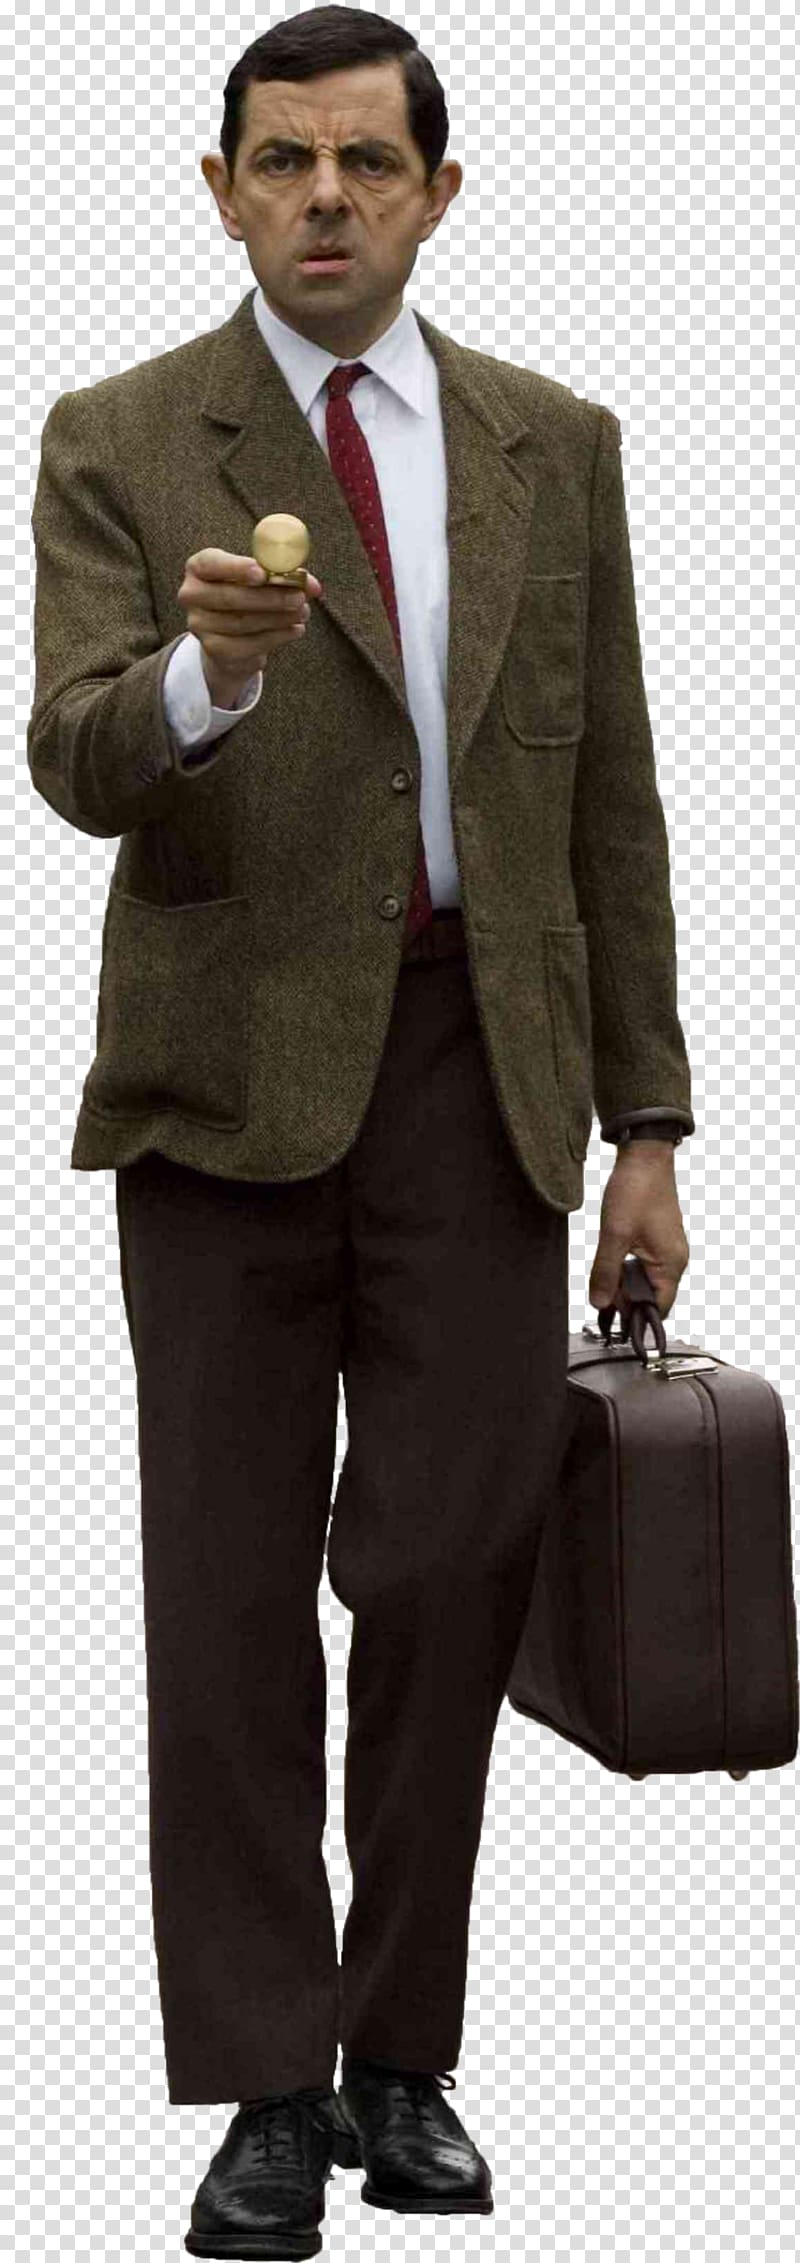 Rowan Atkinson holding suitcase, Rowan Atkinson Mr. Bean Icon, Mr. Bean transparent background PNG clipart